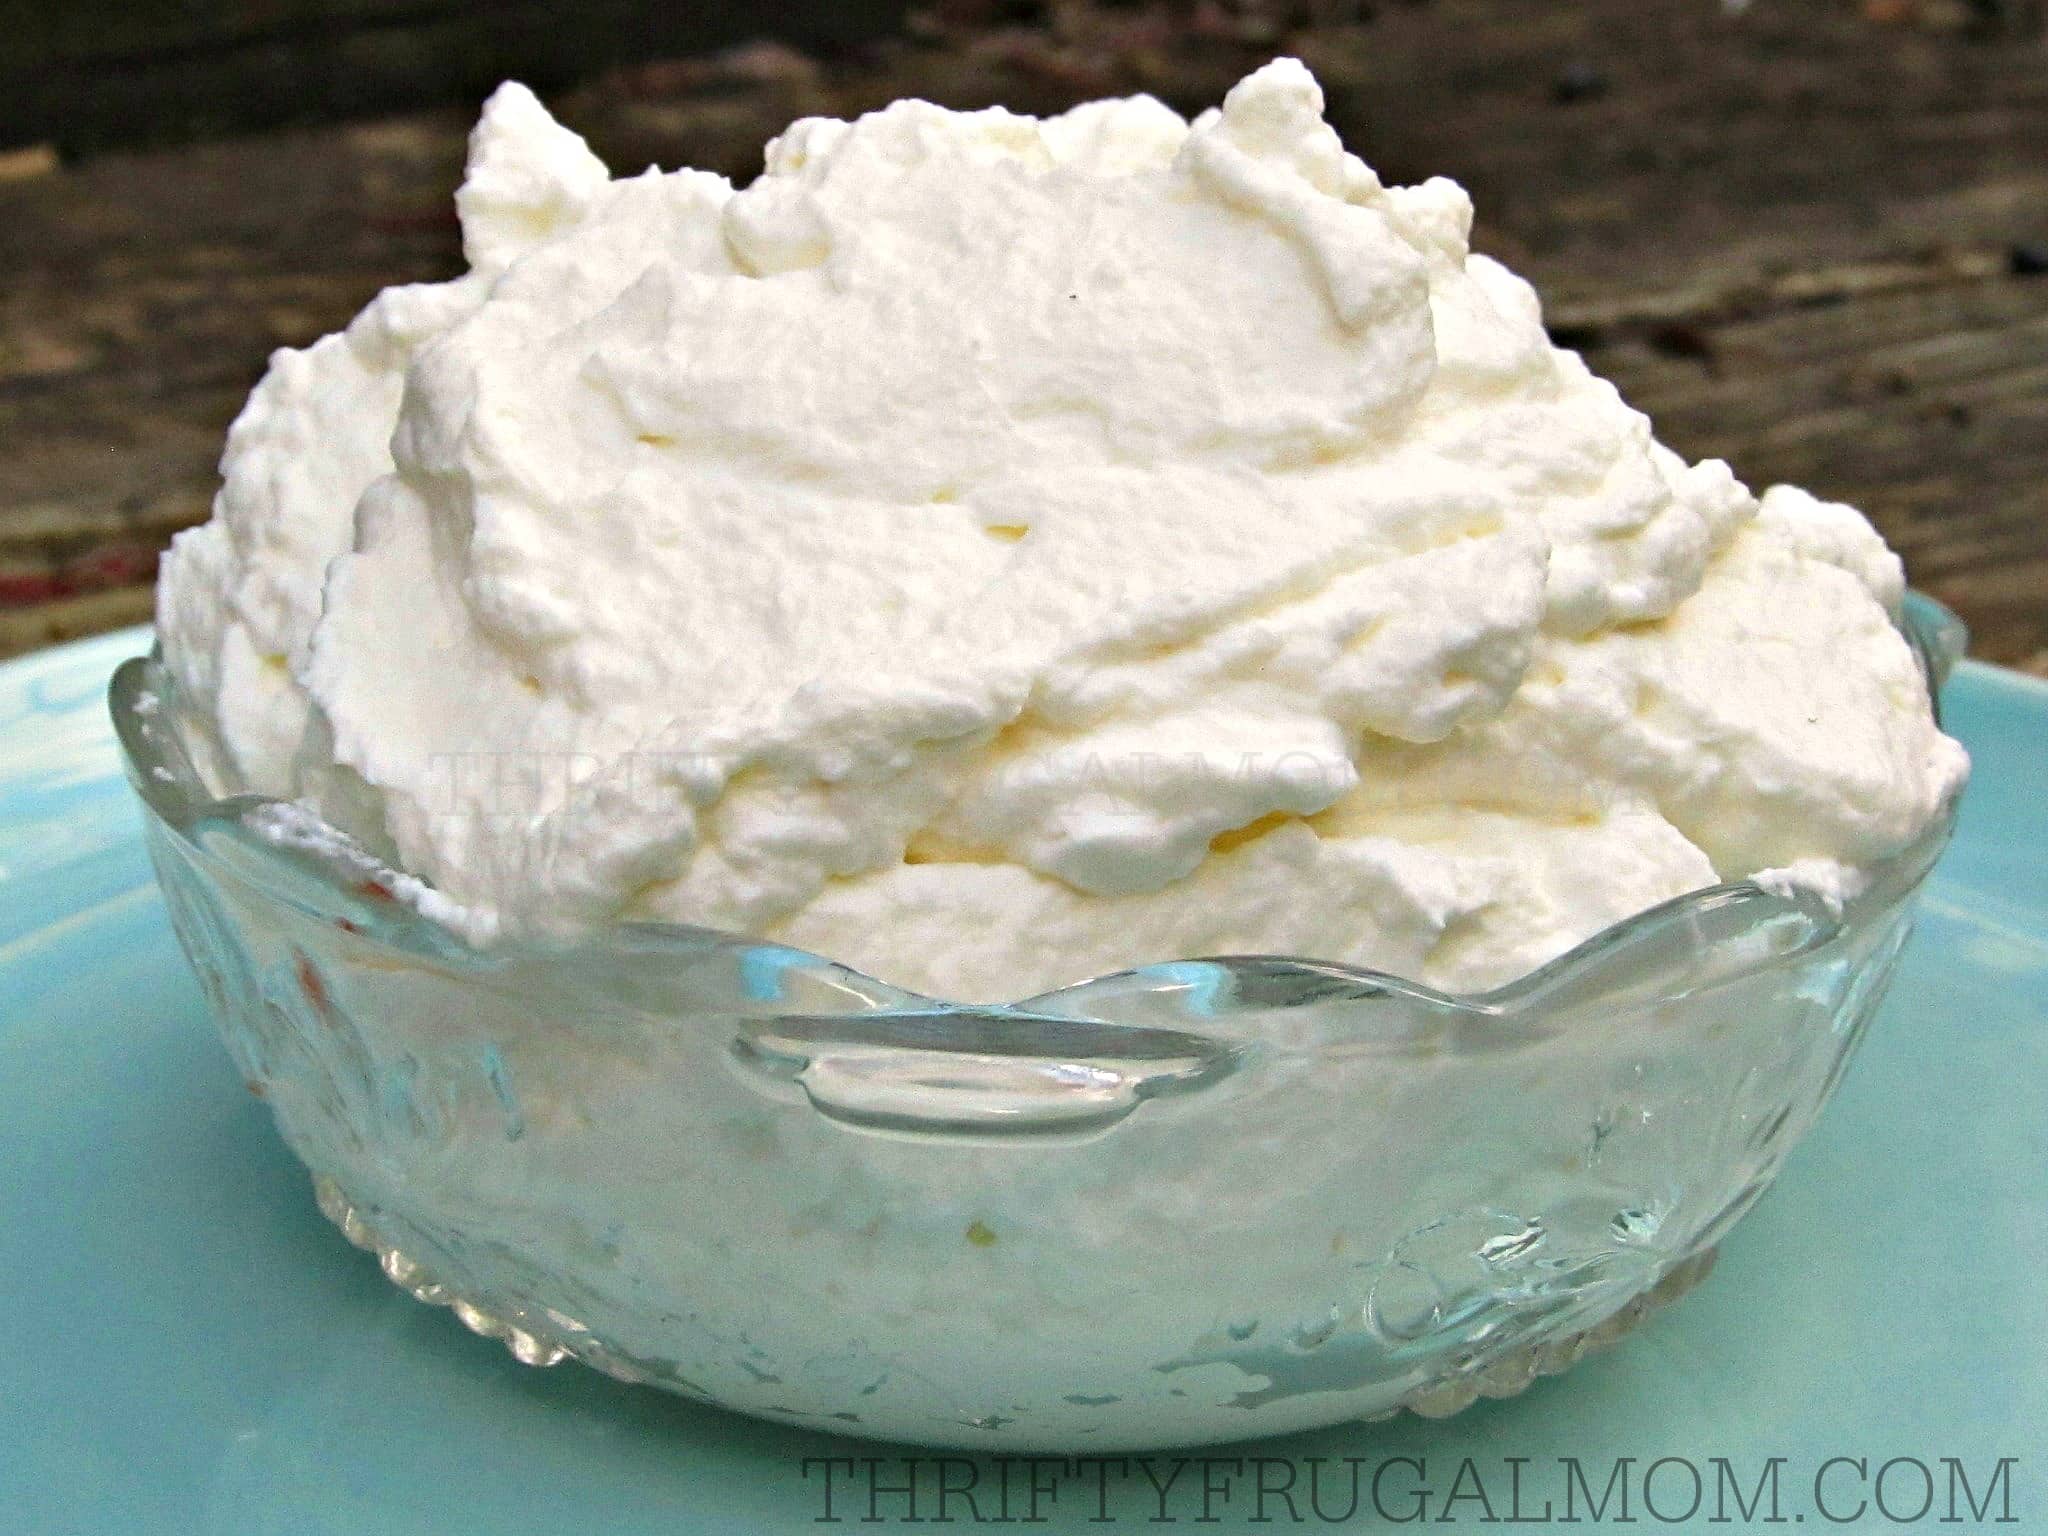 https://www.thriftyfrugalmom.com/wp-content/uploads/2015/04/Homemade-Whipped-Cream-Recipe.jpg